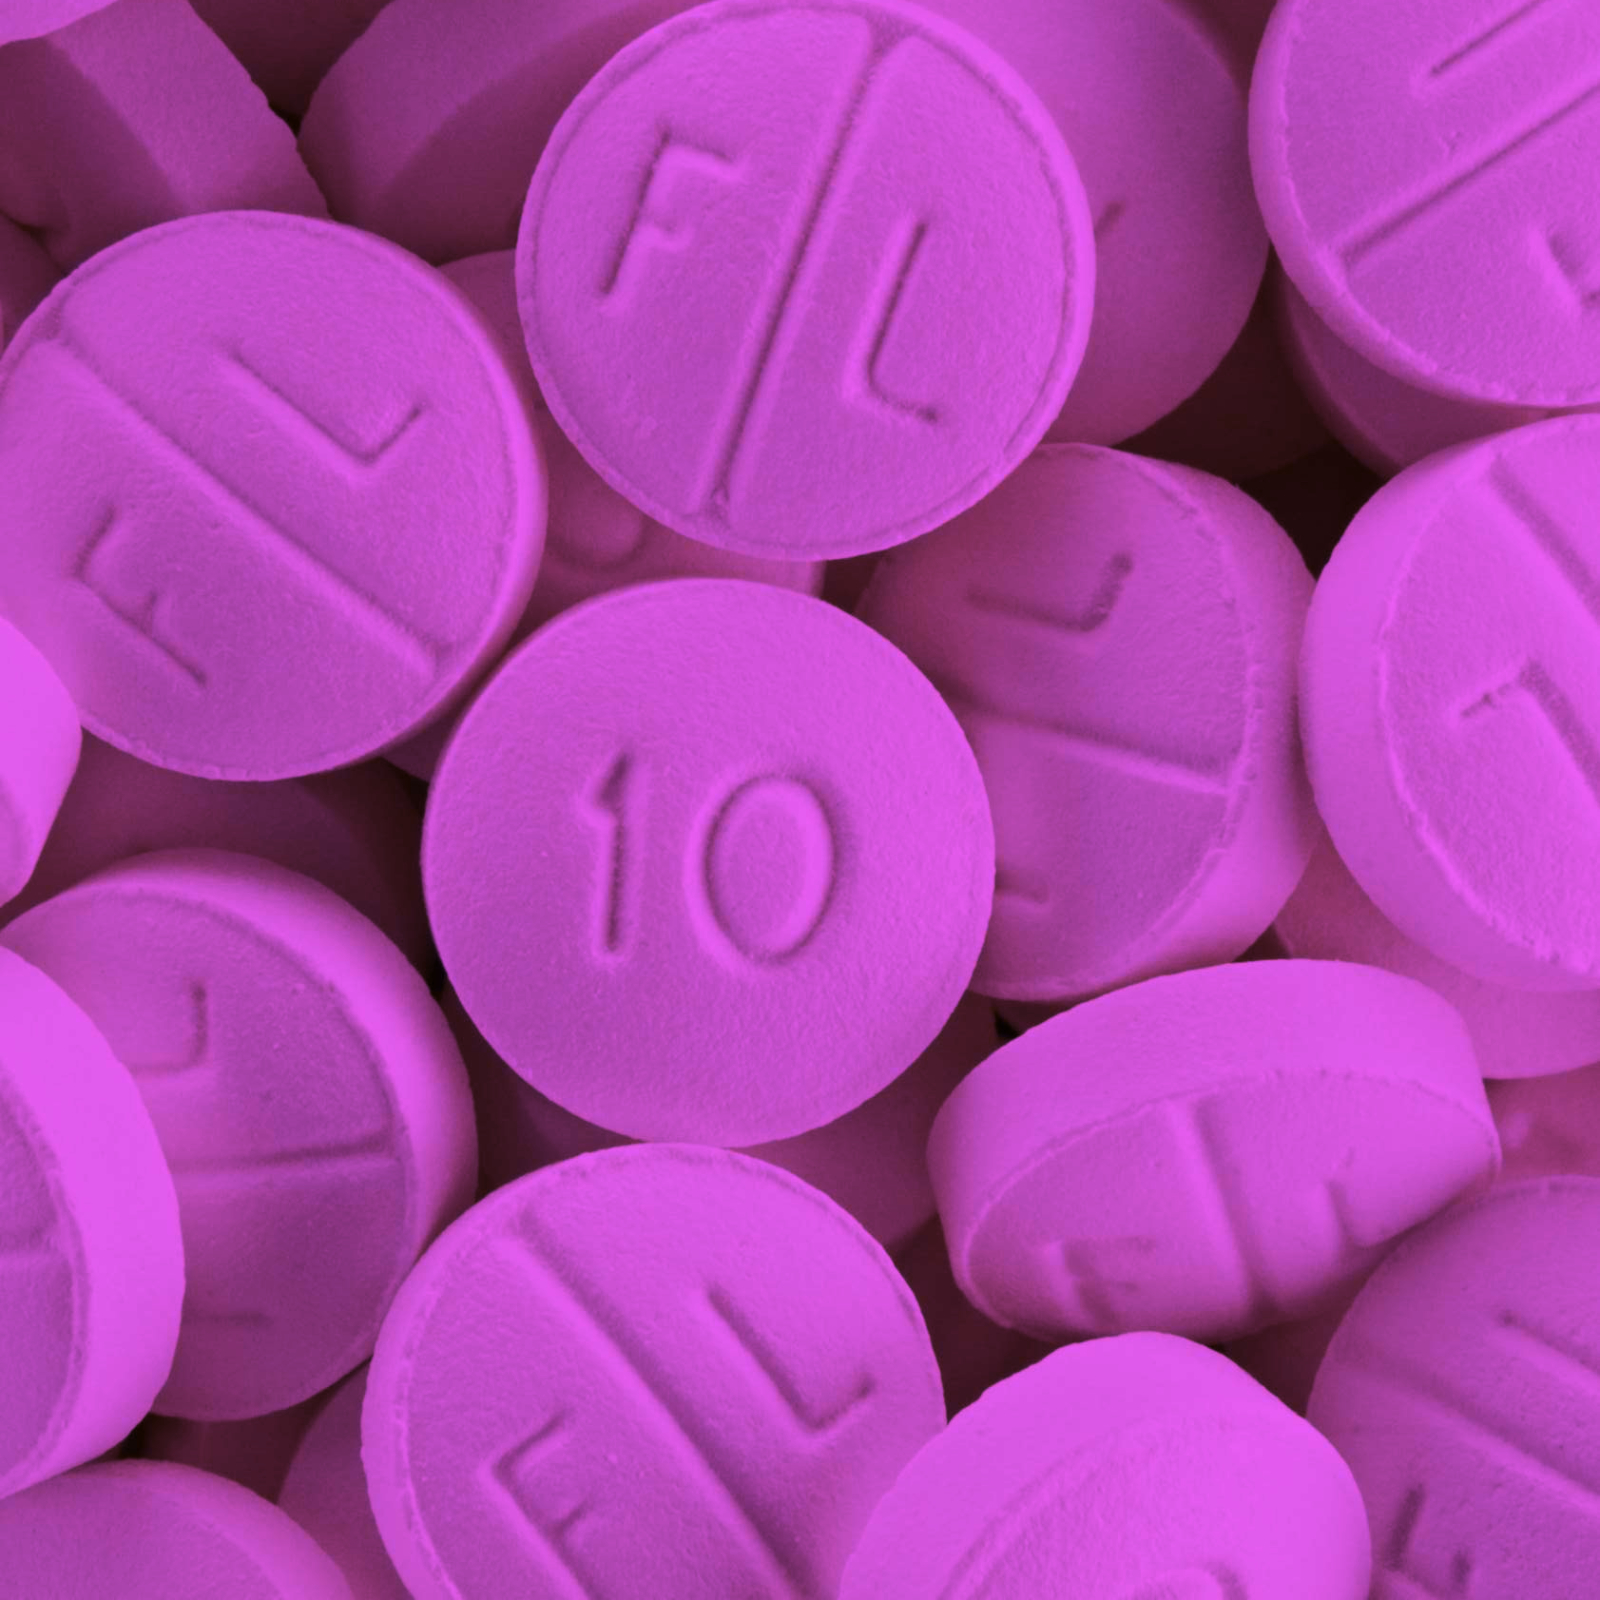 some Lexapro pills